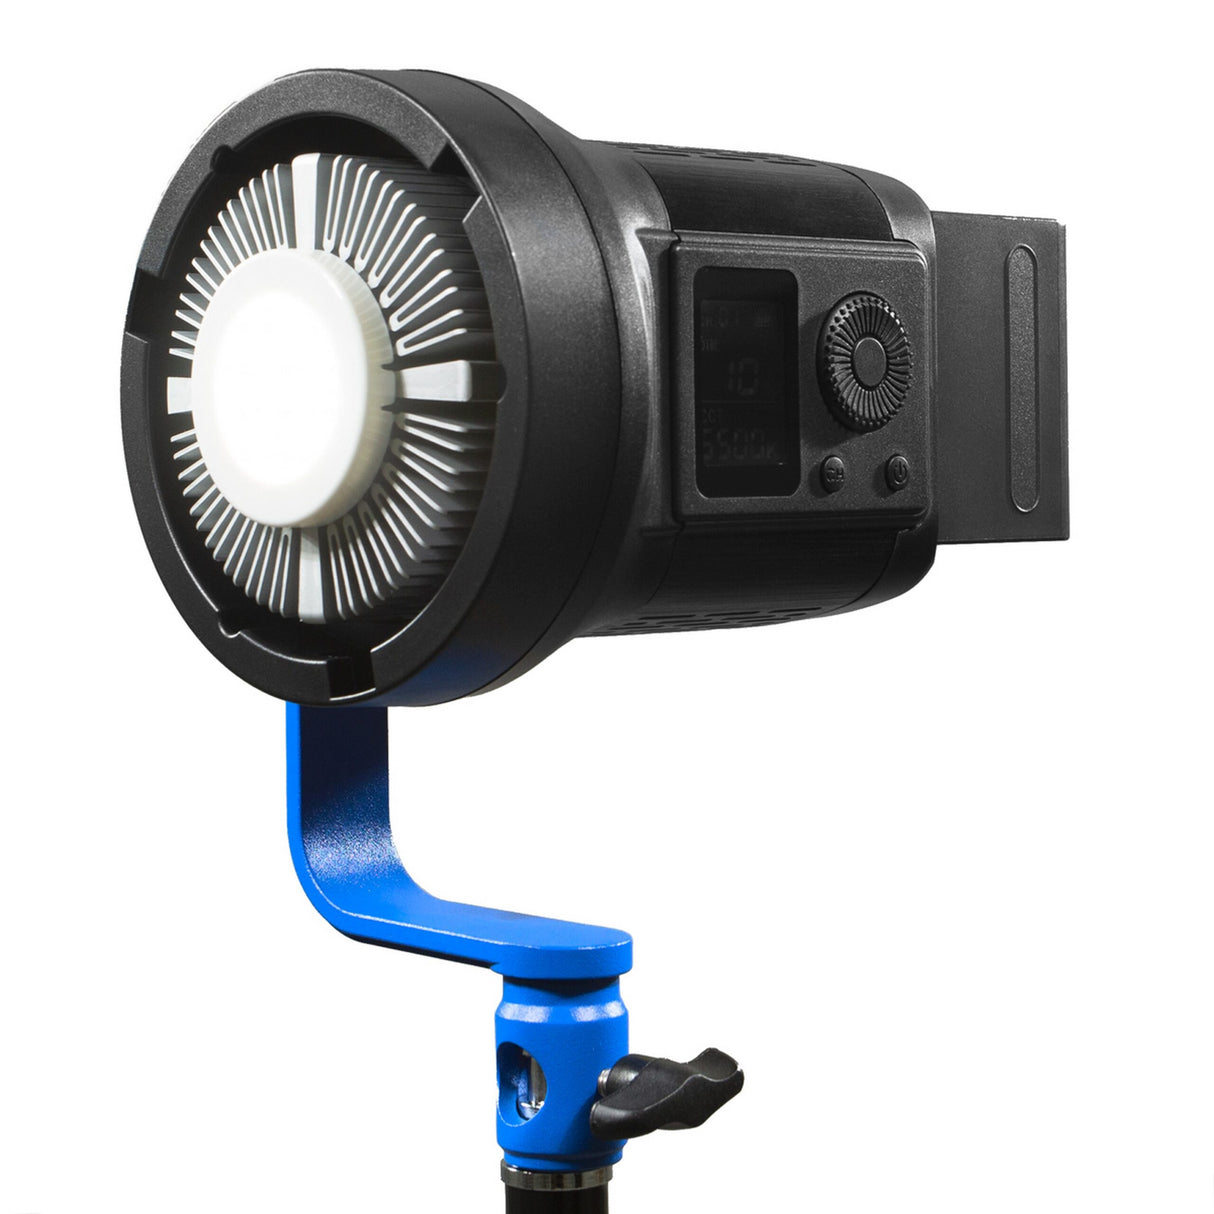 Dracast Boltray Plus LED800 Bicolor Adjustable CCT Point Source LED Light